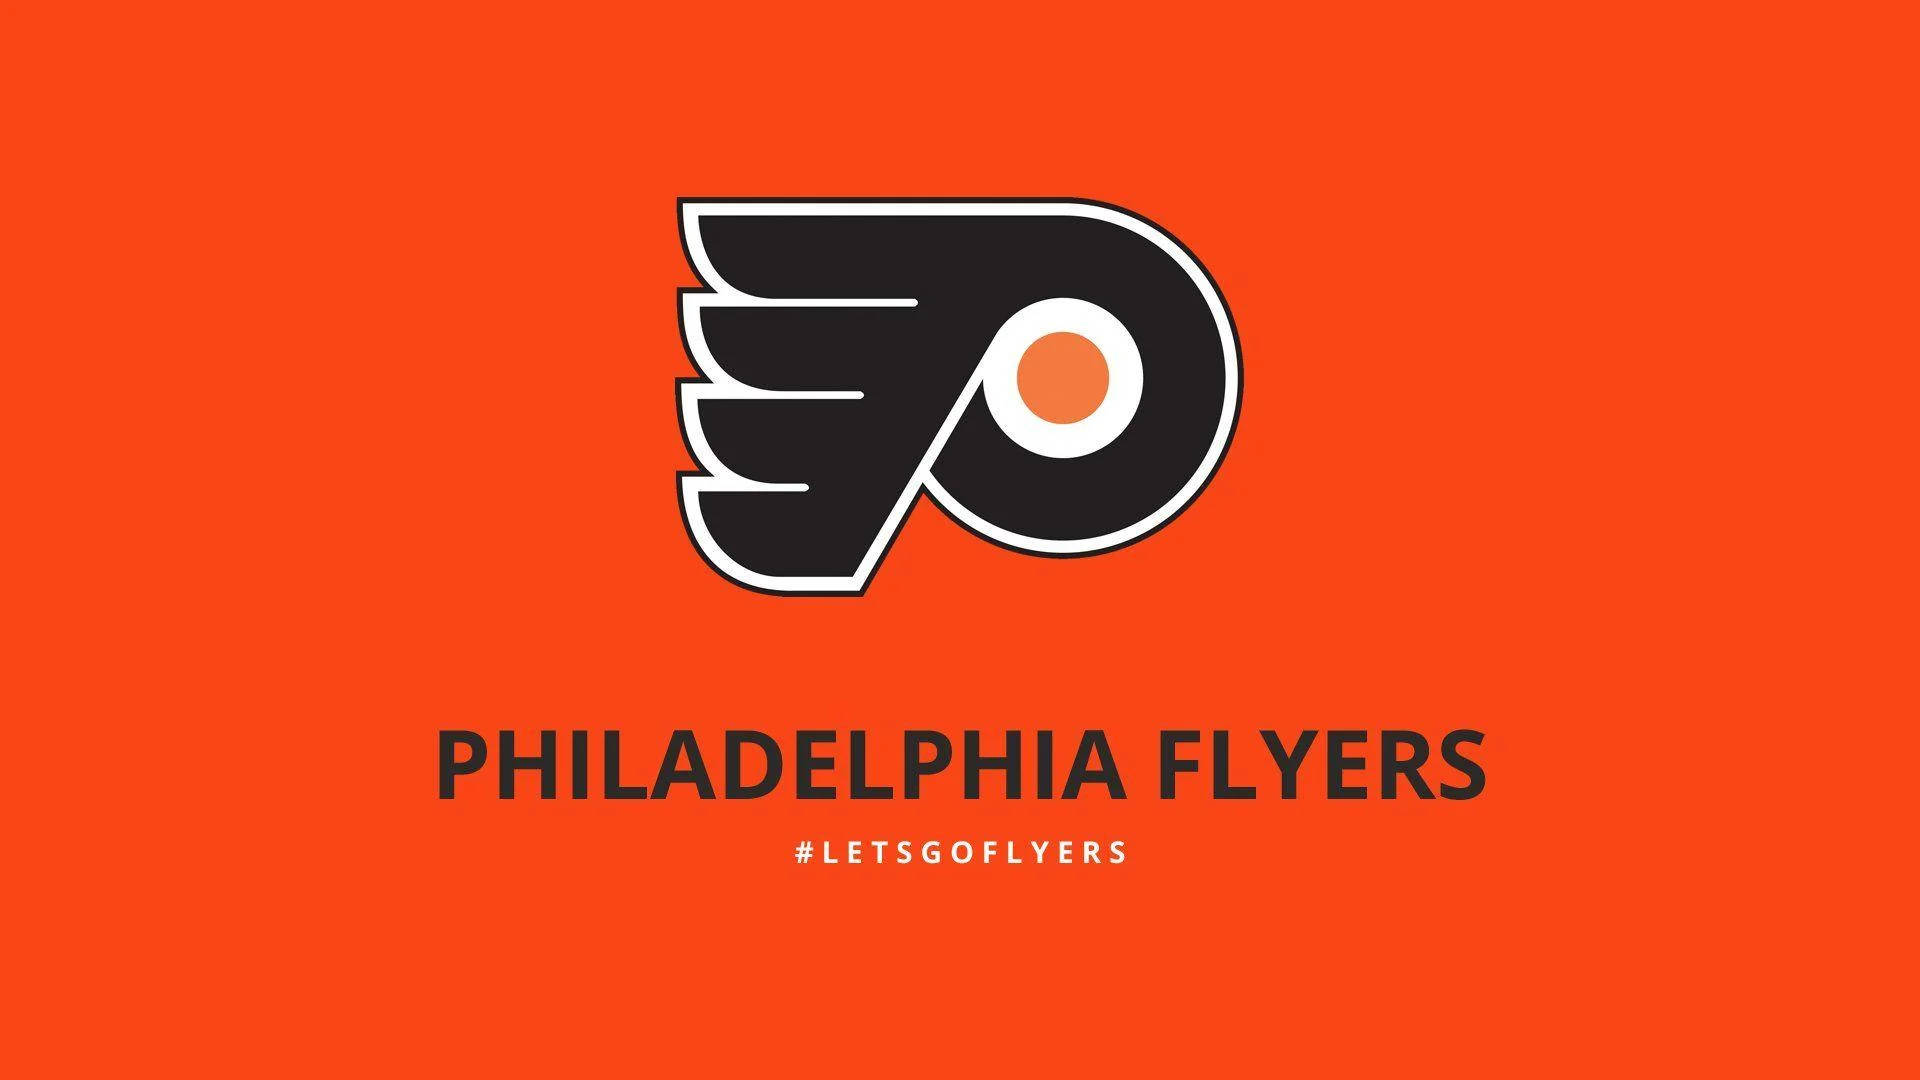 Imágenes De Philadelphia Flyers